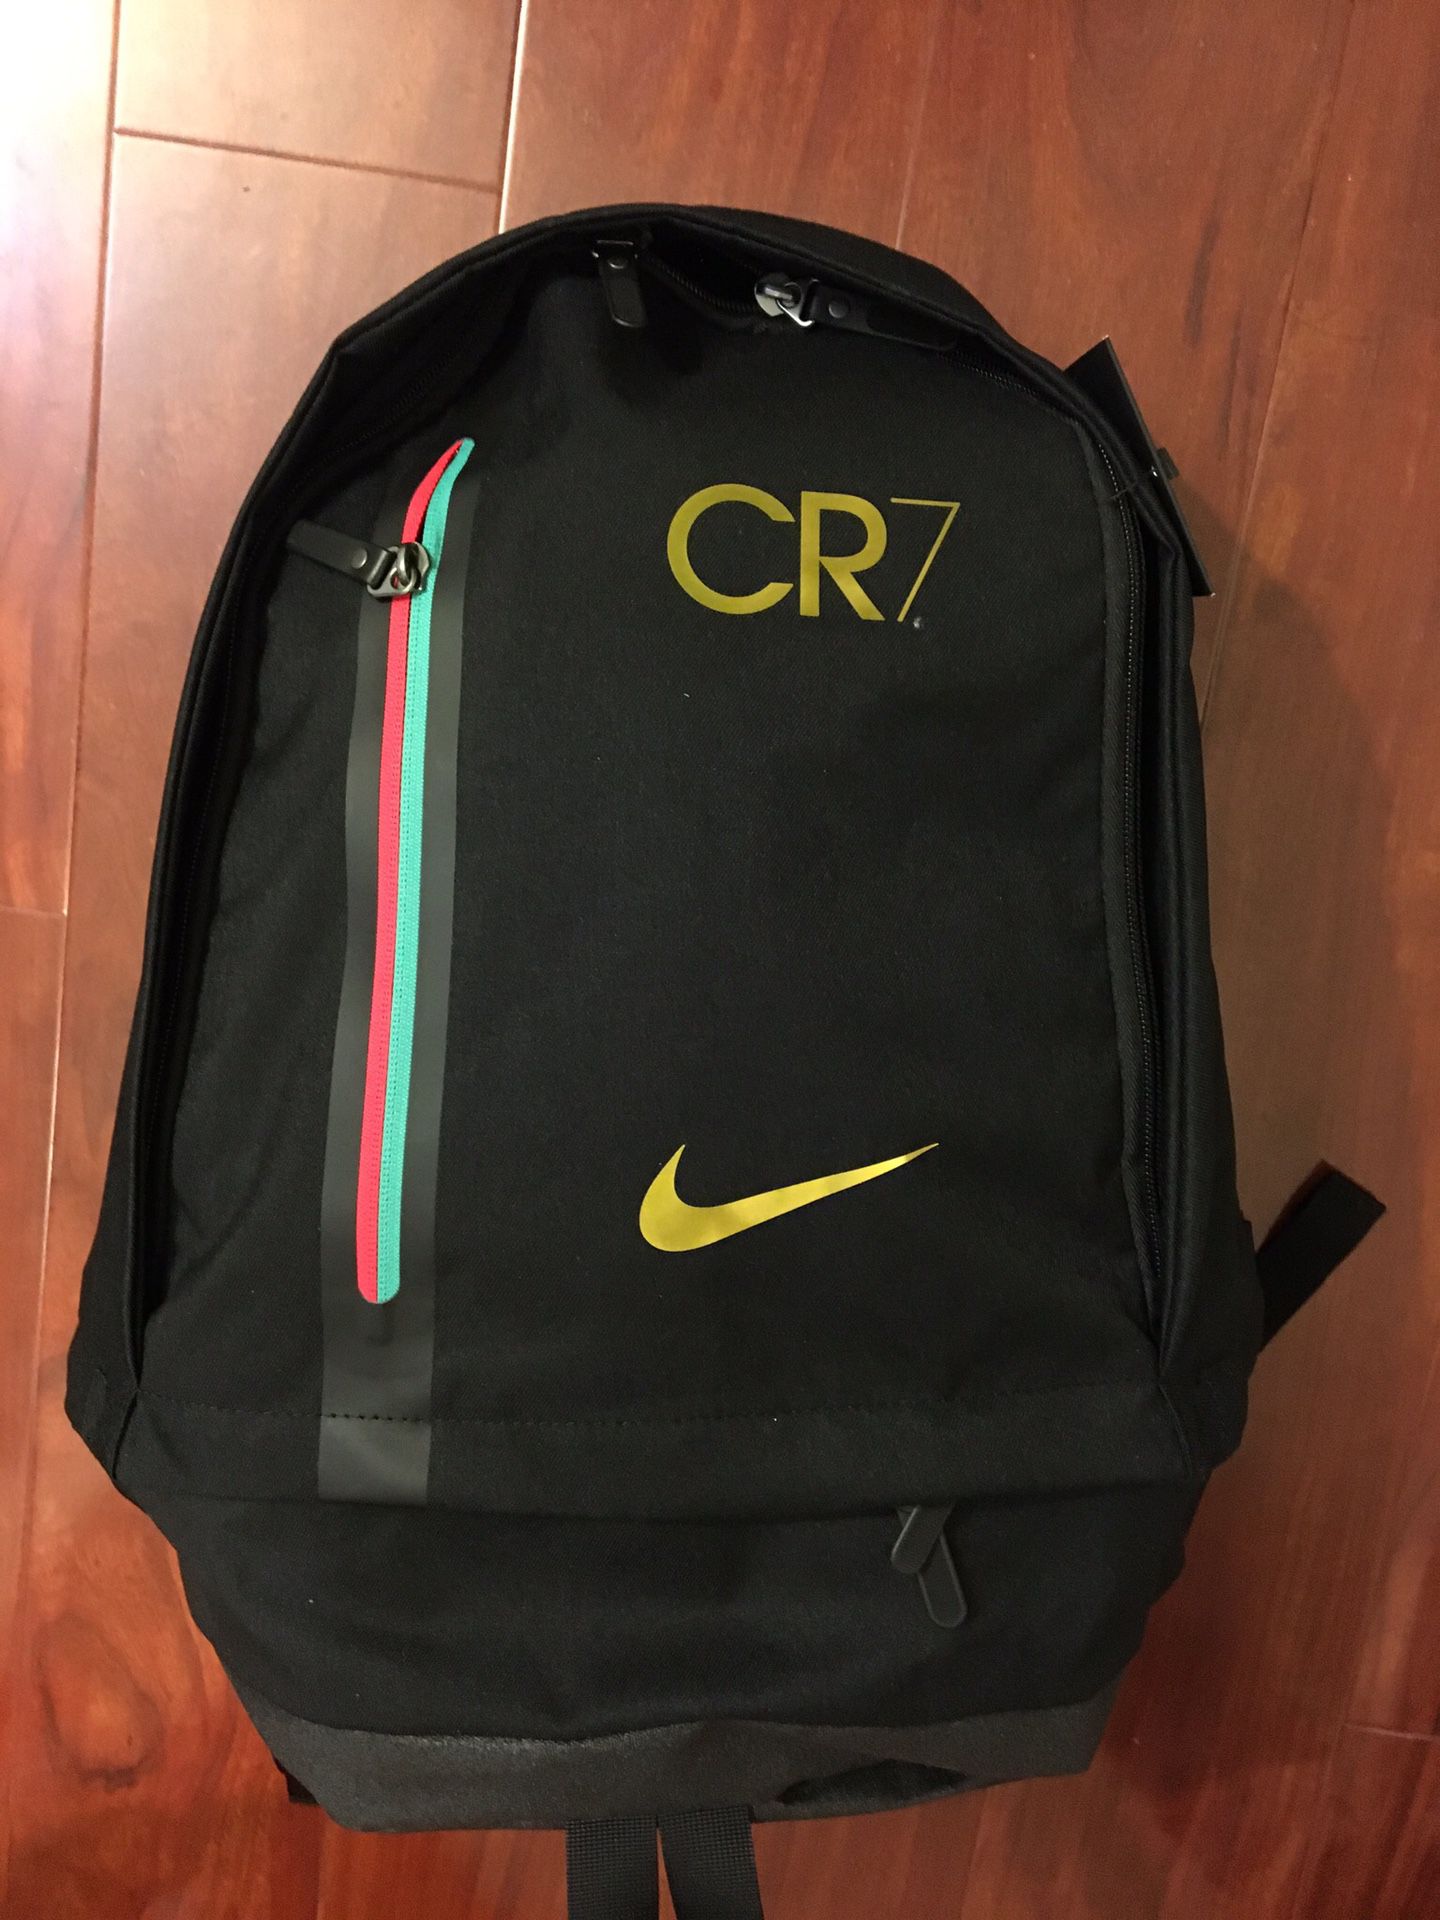 New Nike cr7 backpack soccer black color for in La CA - OfferUp